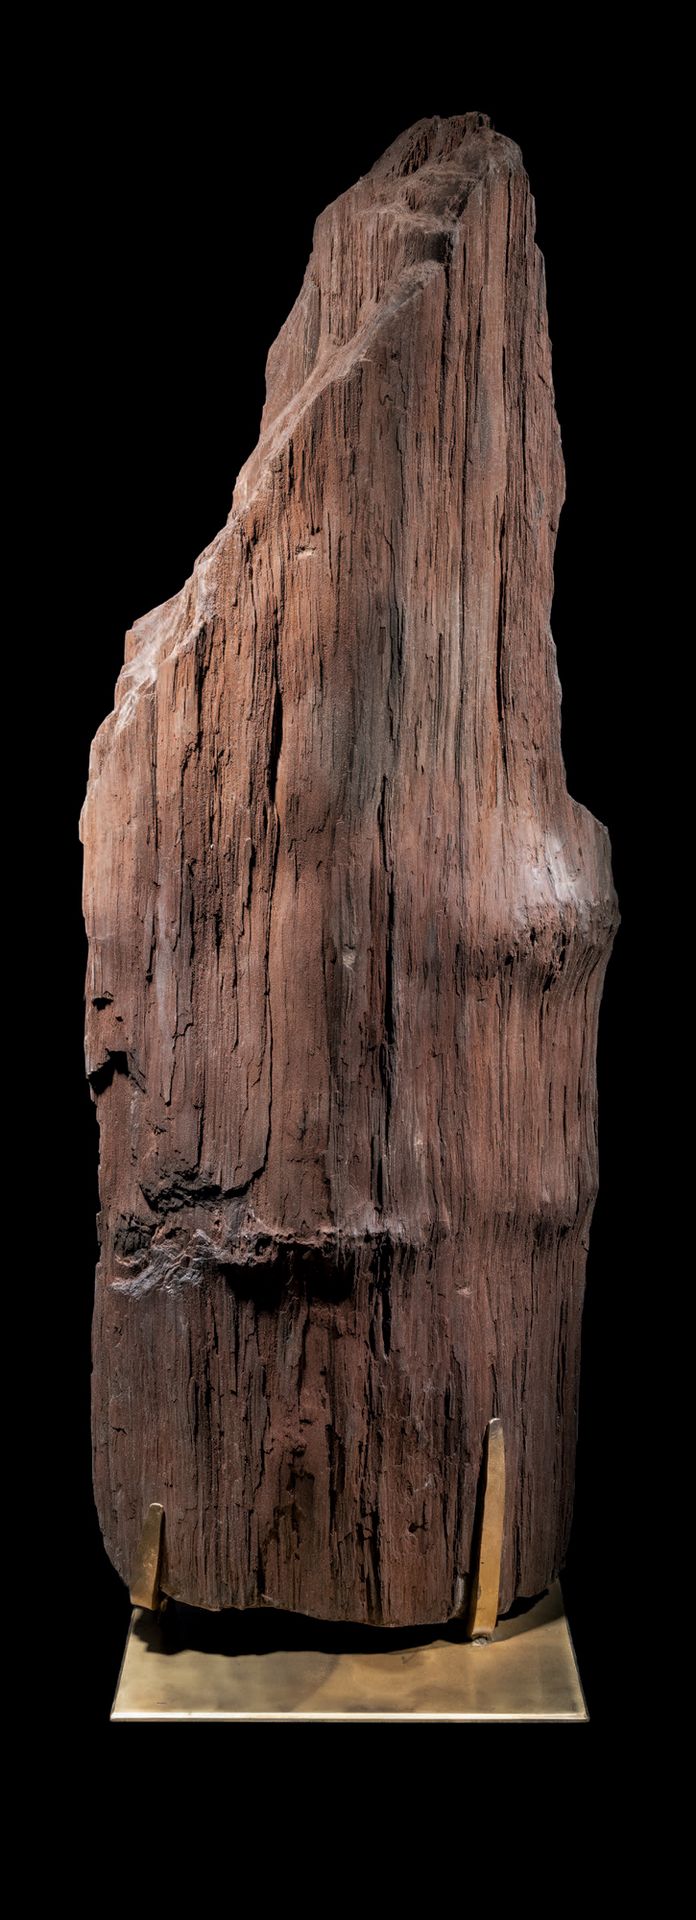 Null TRONCO FOSILIZADO
H. 115 cm - A. 38 cm - P. 30 cm - Peso: 87kg
Un tronco pe&hellip;